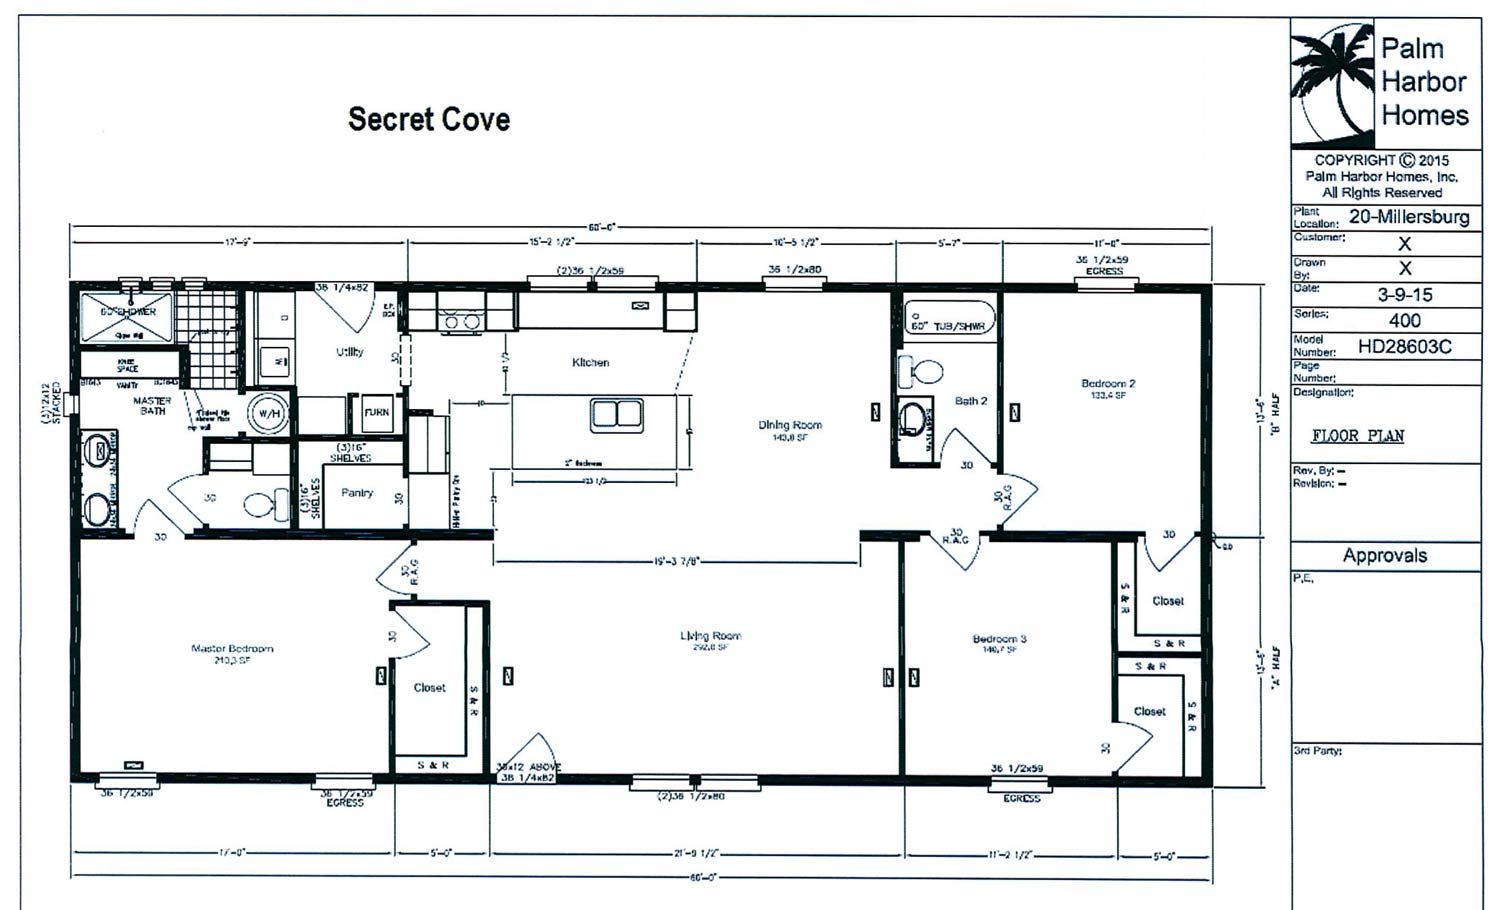 Homes Direct Modular Homes - Model HD28603C - Floorplan